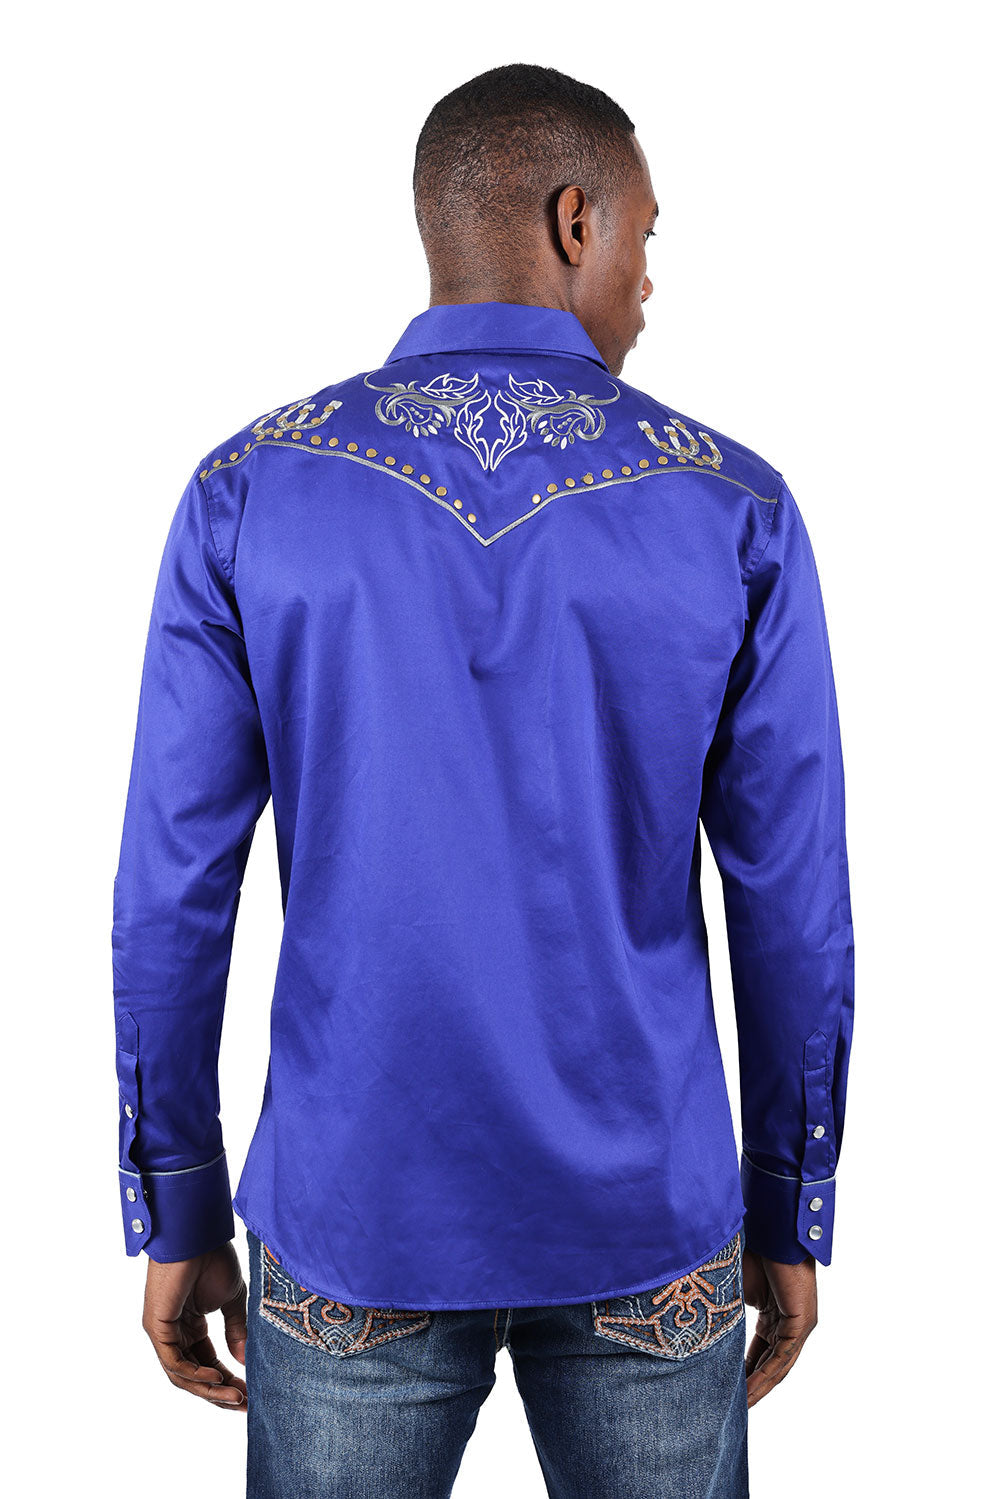 BARABAS Men's Horseshoe Floral Embroidery Long Sleeve Shirts 3WS6 Royal